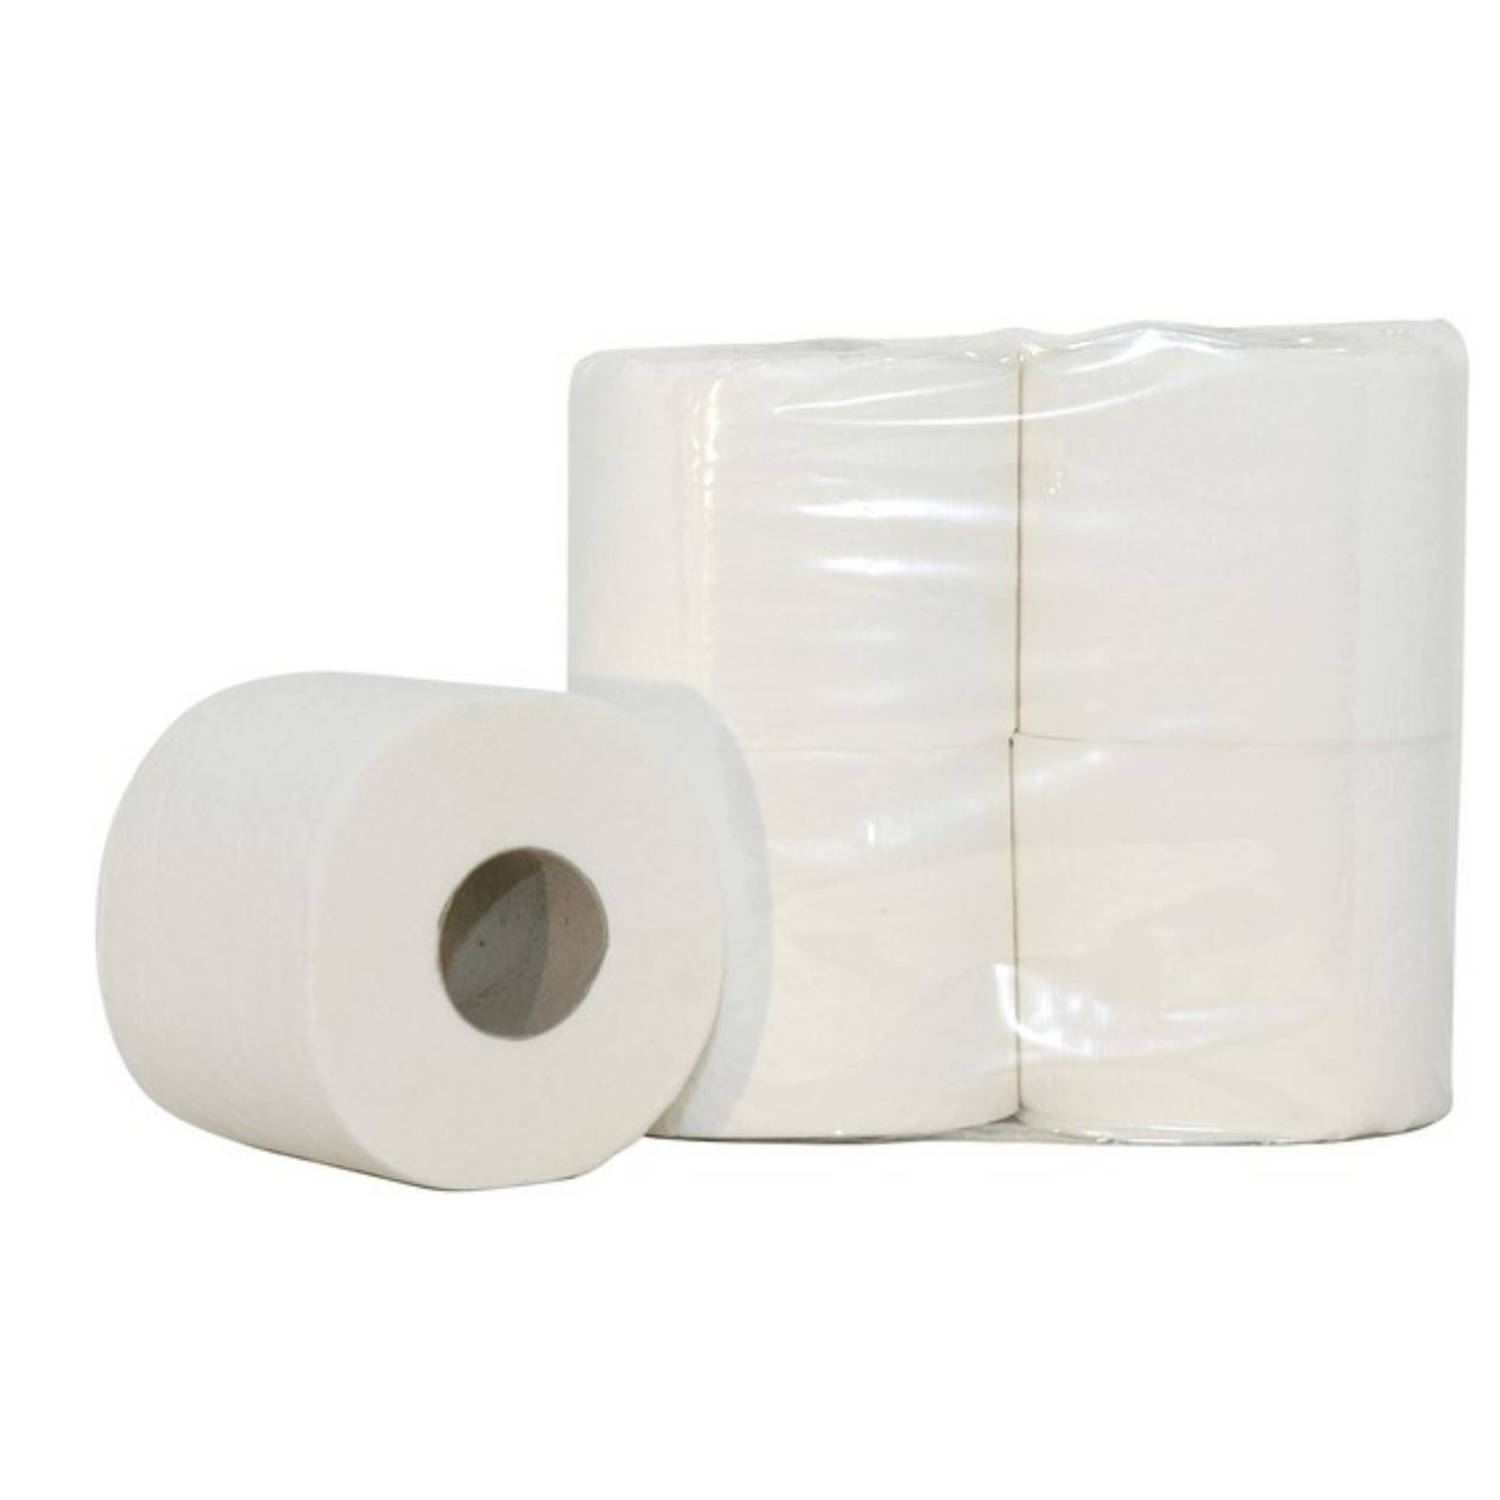 Europroducts toiletpapier supersoft 2-laags wit 10 x 4 rollen